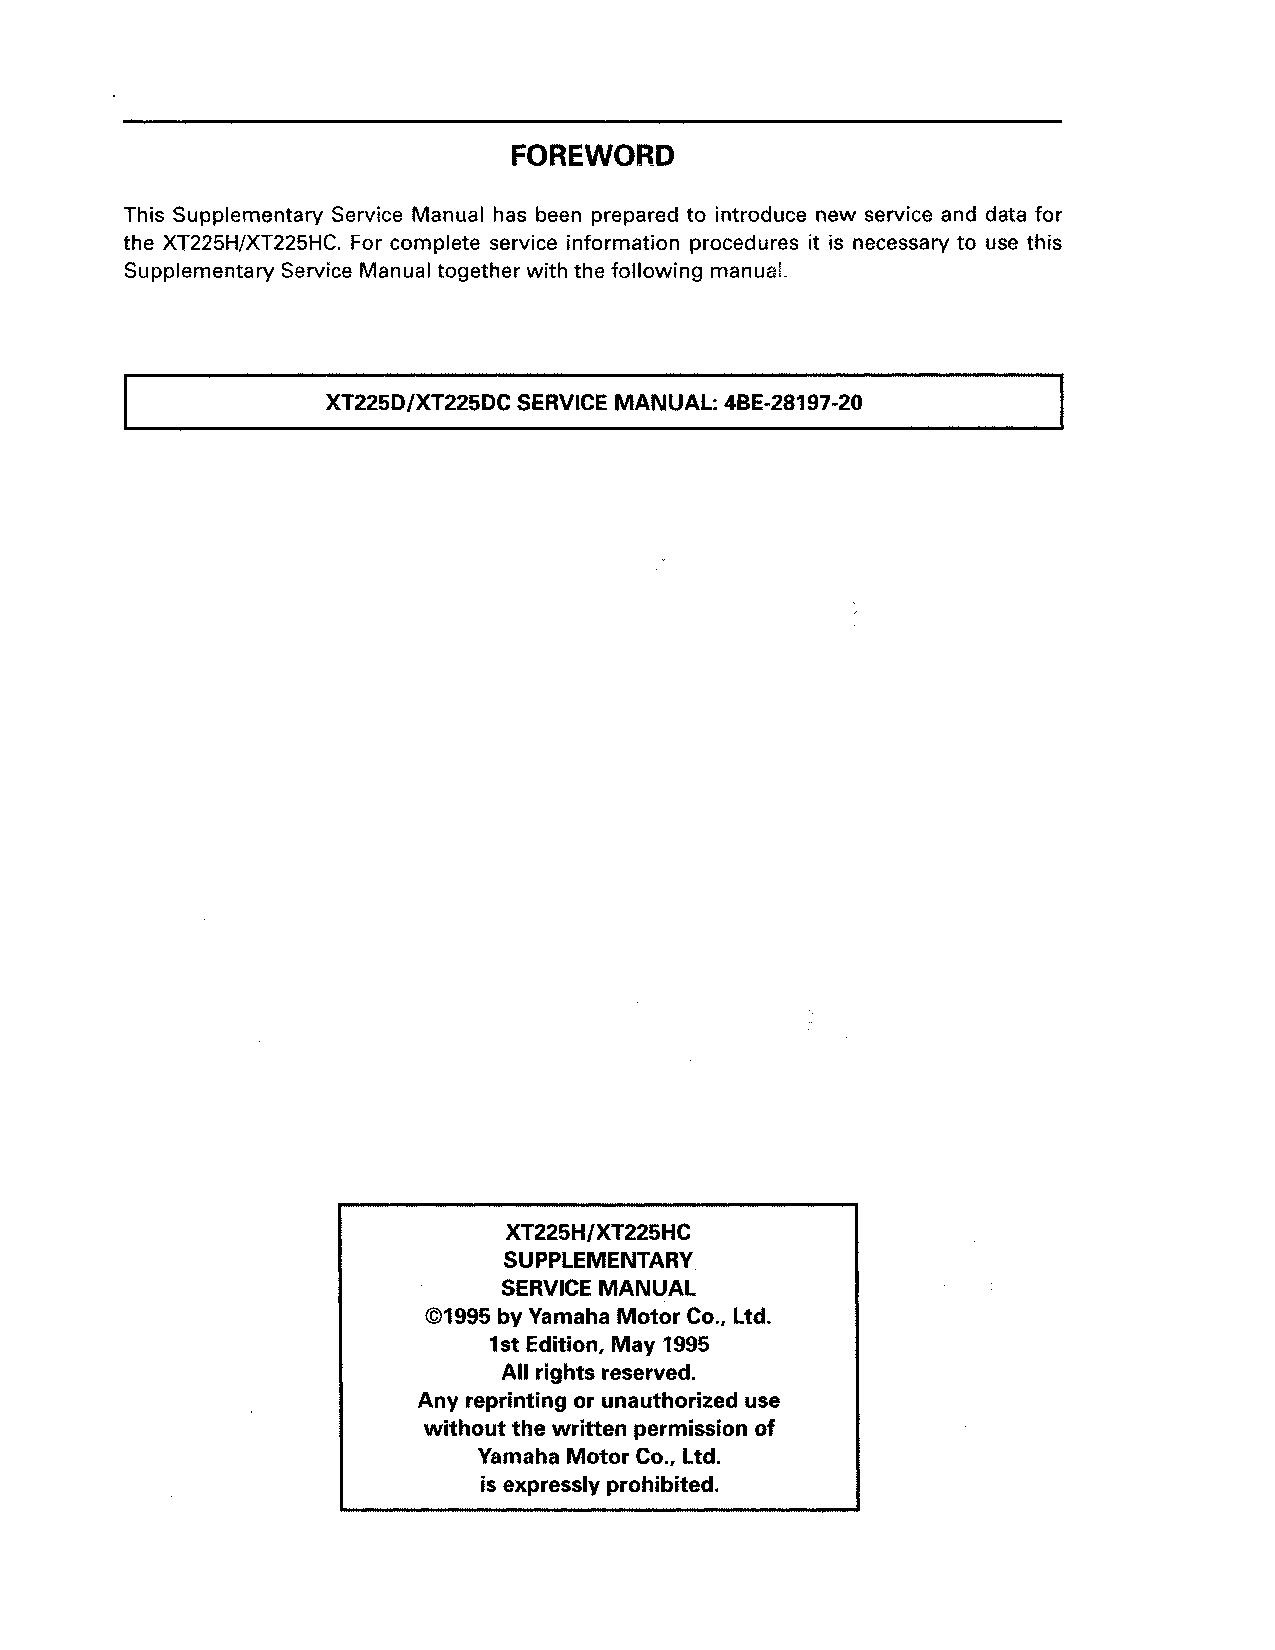 File:Yamaha XT225 1995 Service Manual.pdf